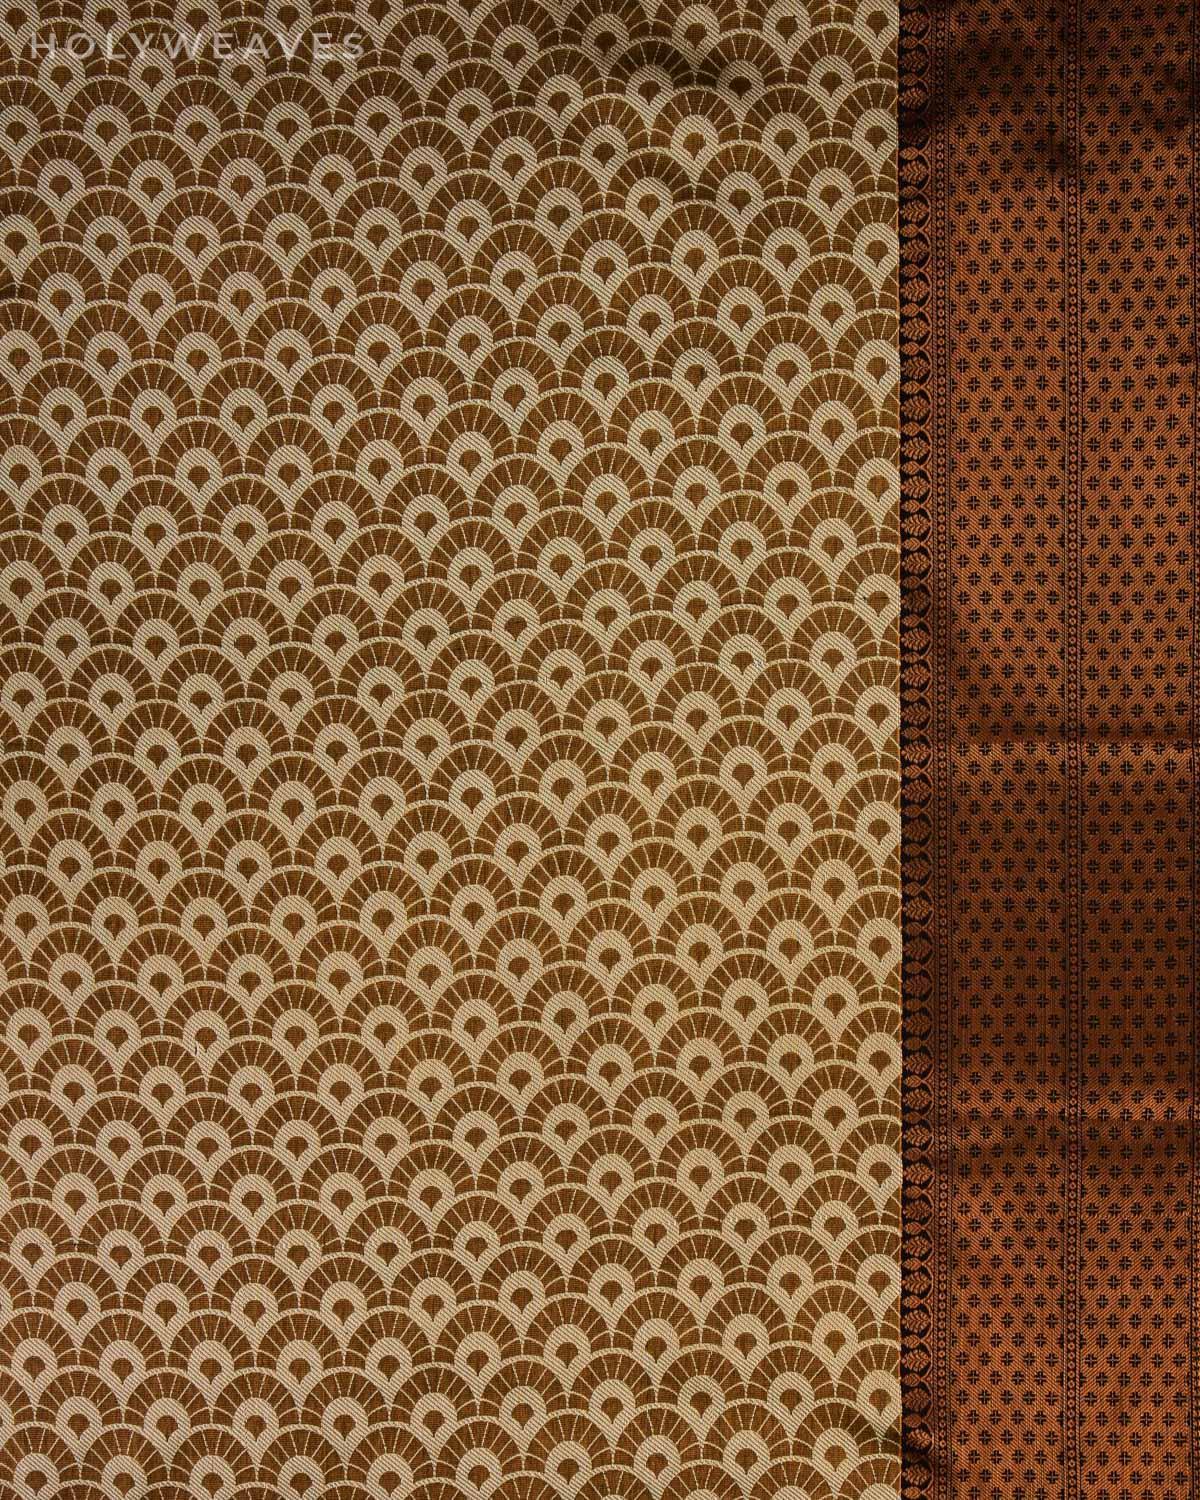 Metallic Beige Banarasi Tanchoi Brocade Woven Art Cotton Tissue Saree - By HolyWeaves, Benares